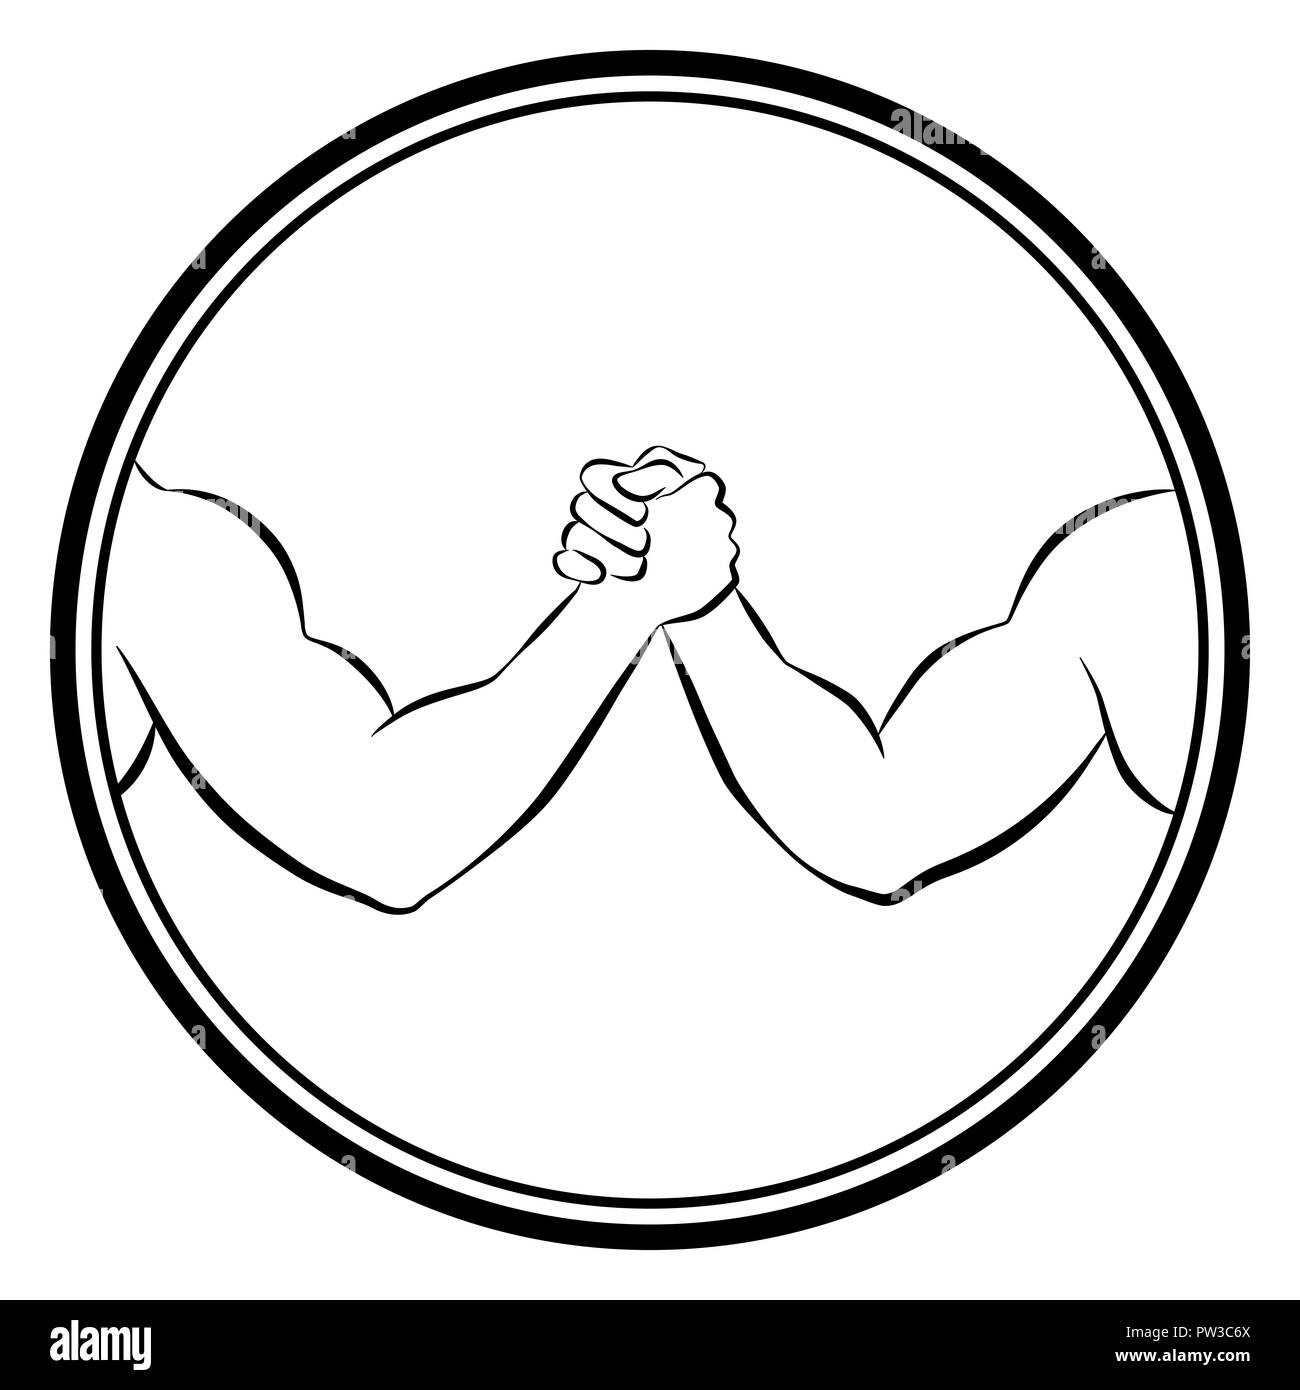 Arm wrestling competition - round logo outline illustration on white background. Stock Photo